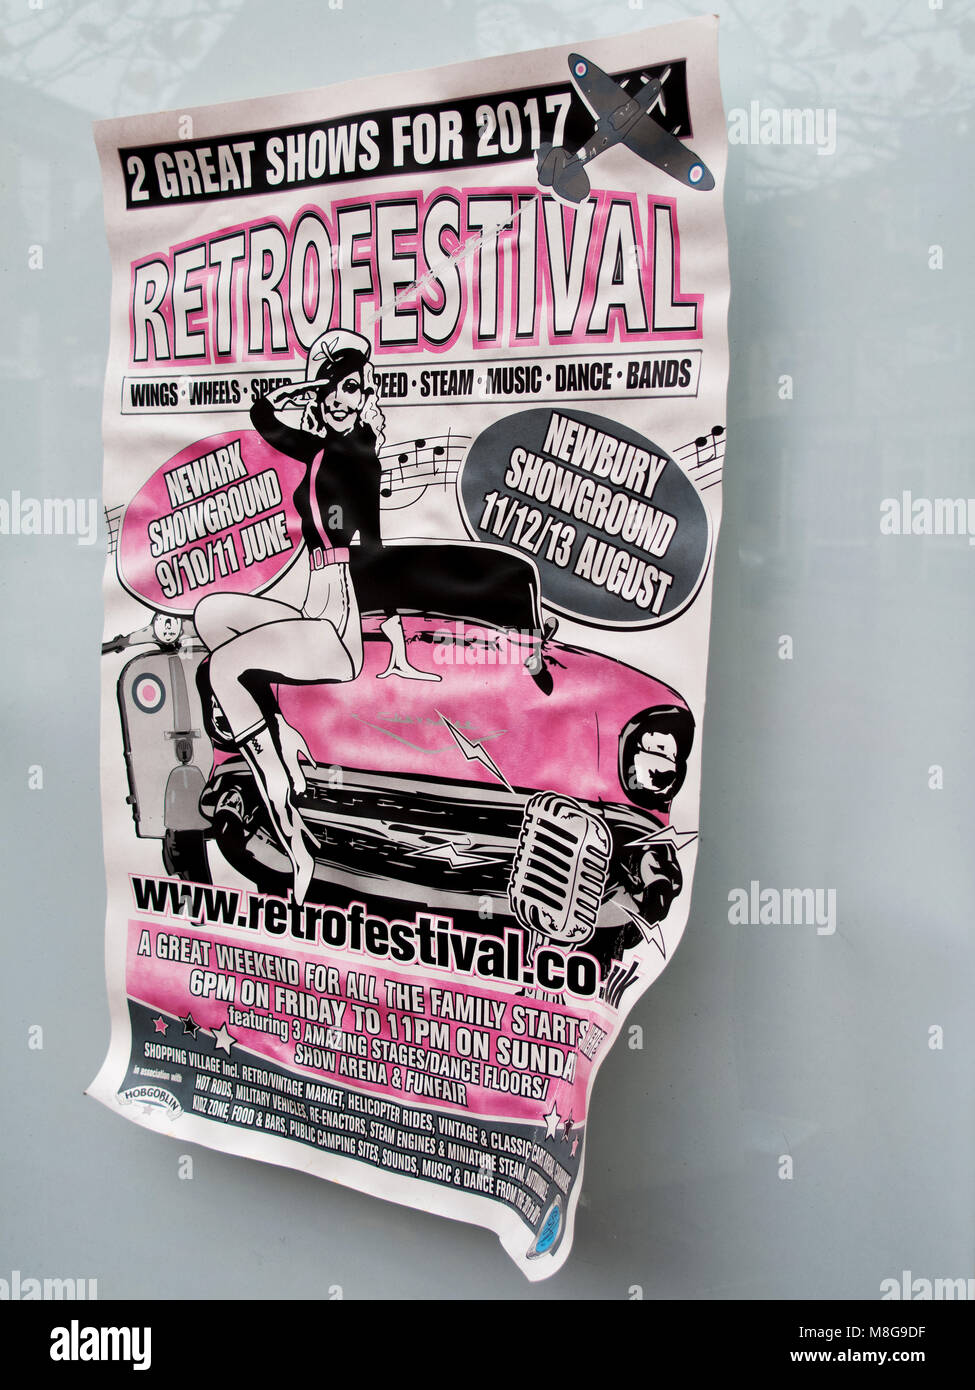 Retrofestival show poster advertising retro festival held at the Newbury showground Stock Photo